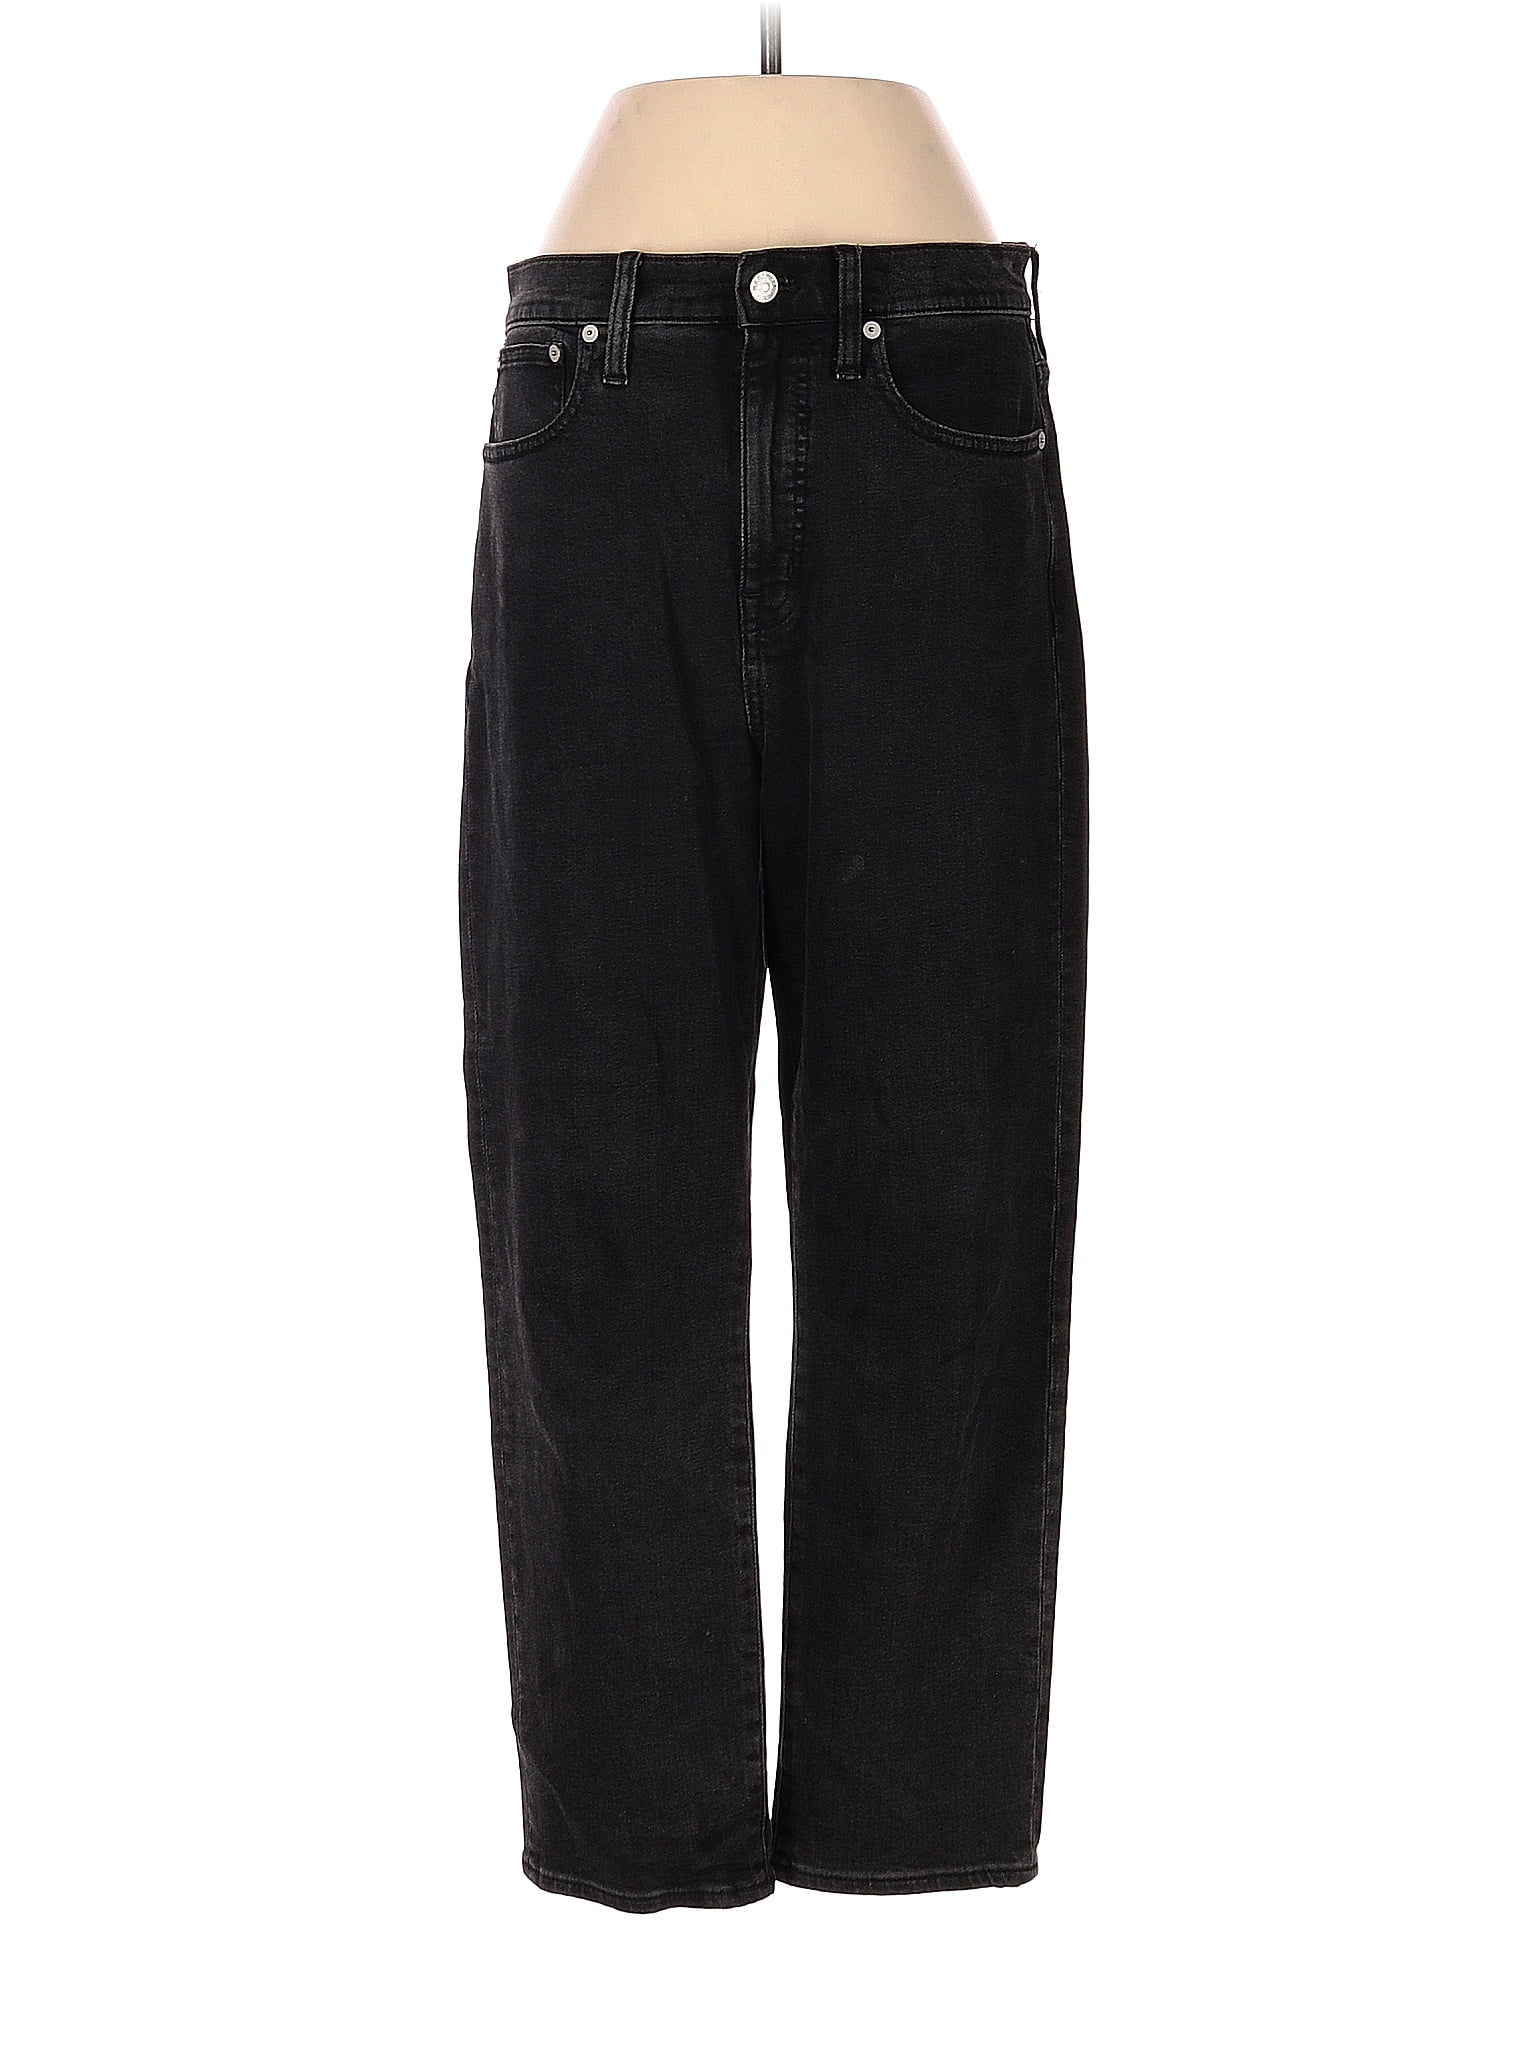 Madewell Solid Black Jeans 27 Waist - 66% off | thredUP